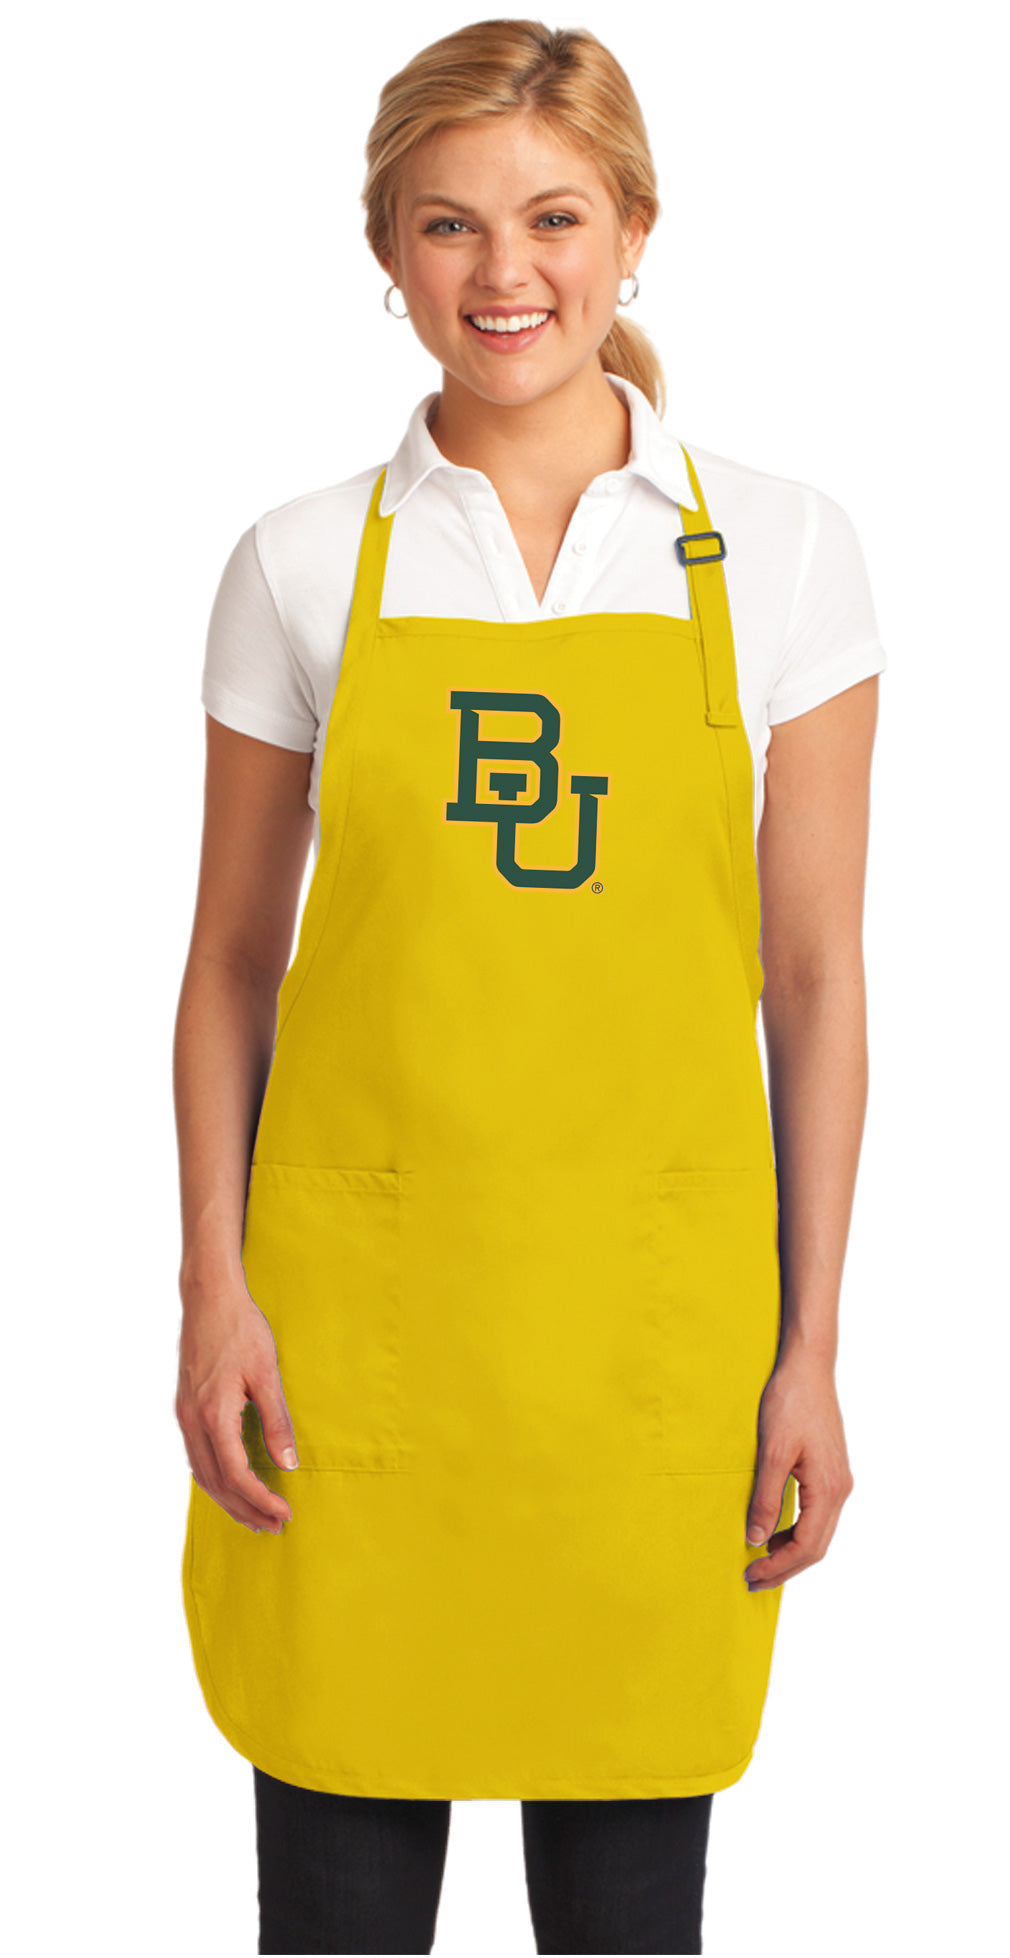 Baylor University Apron BU Bears Apron - Stain Resistant Fabric